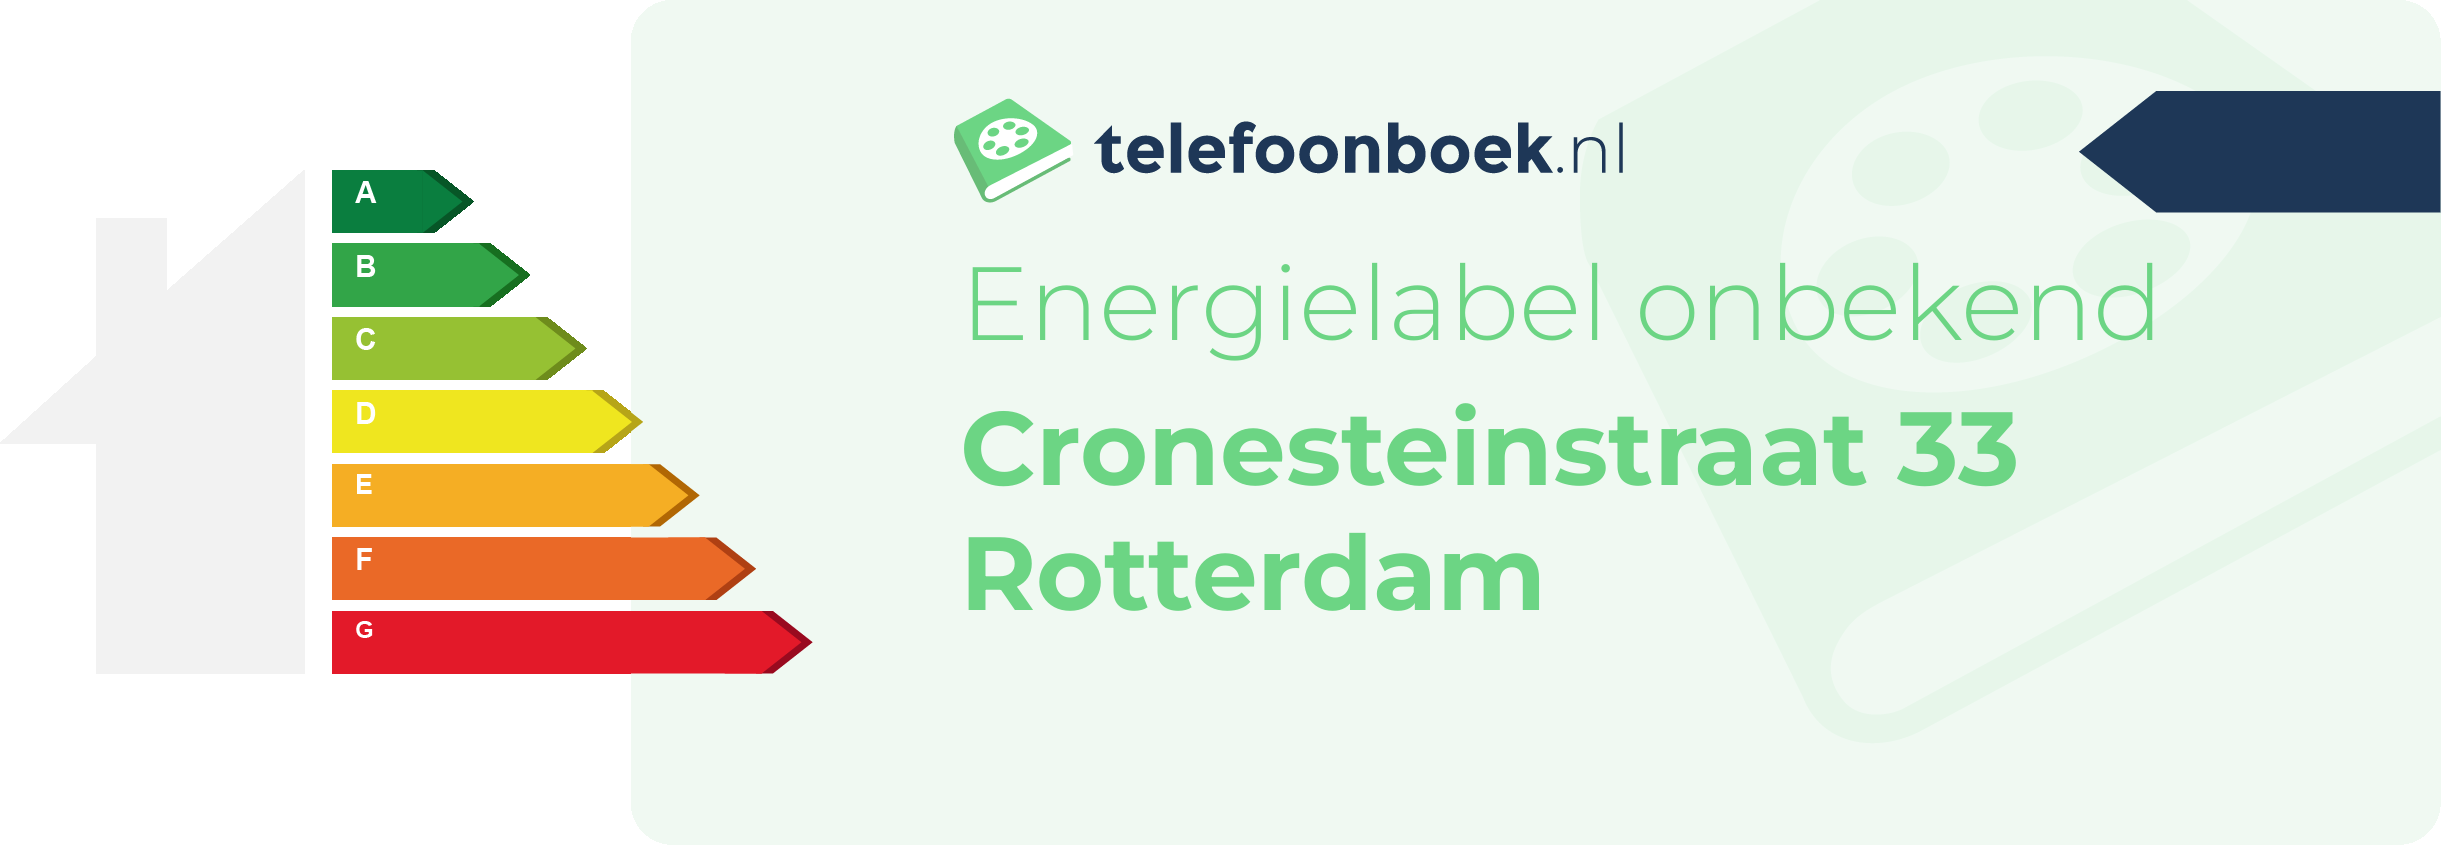 Energielabel Cronesteinstraat 33 Rotterdam